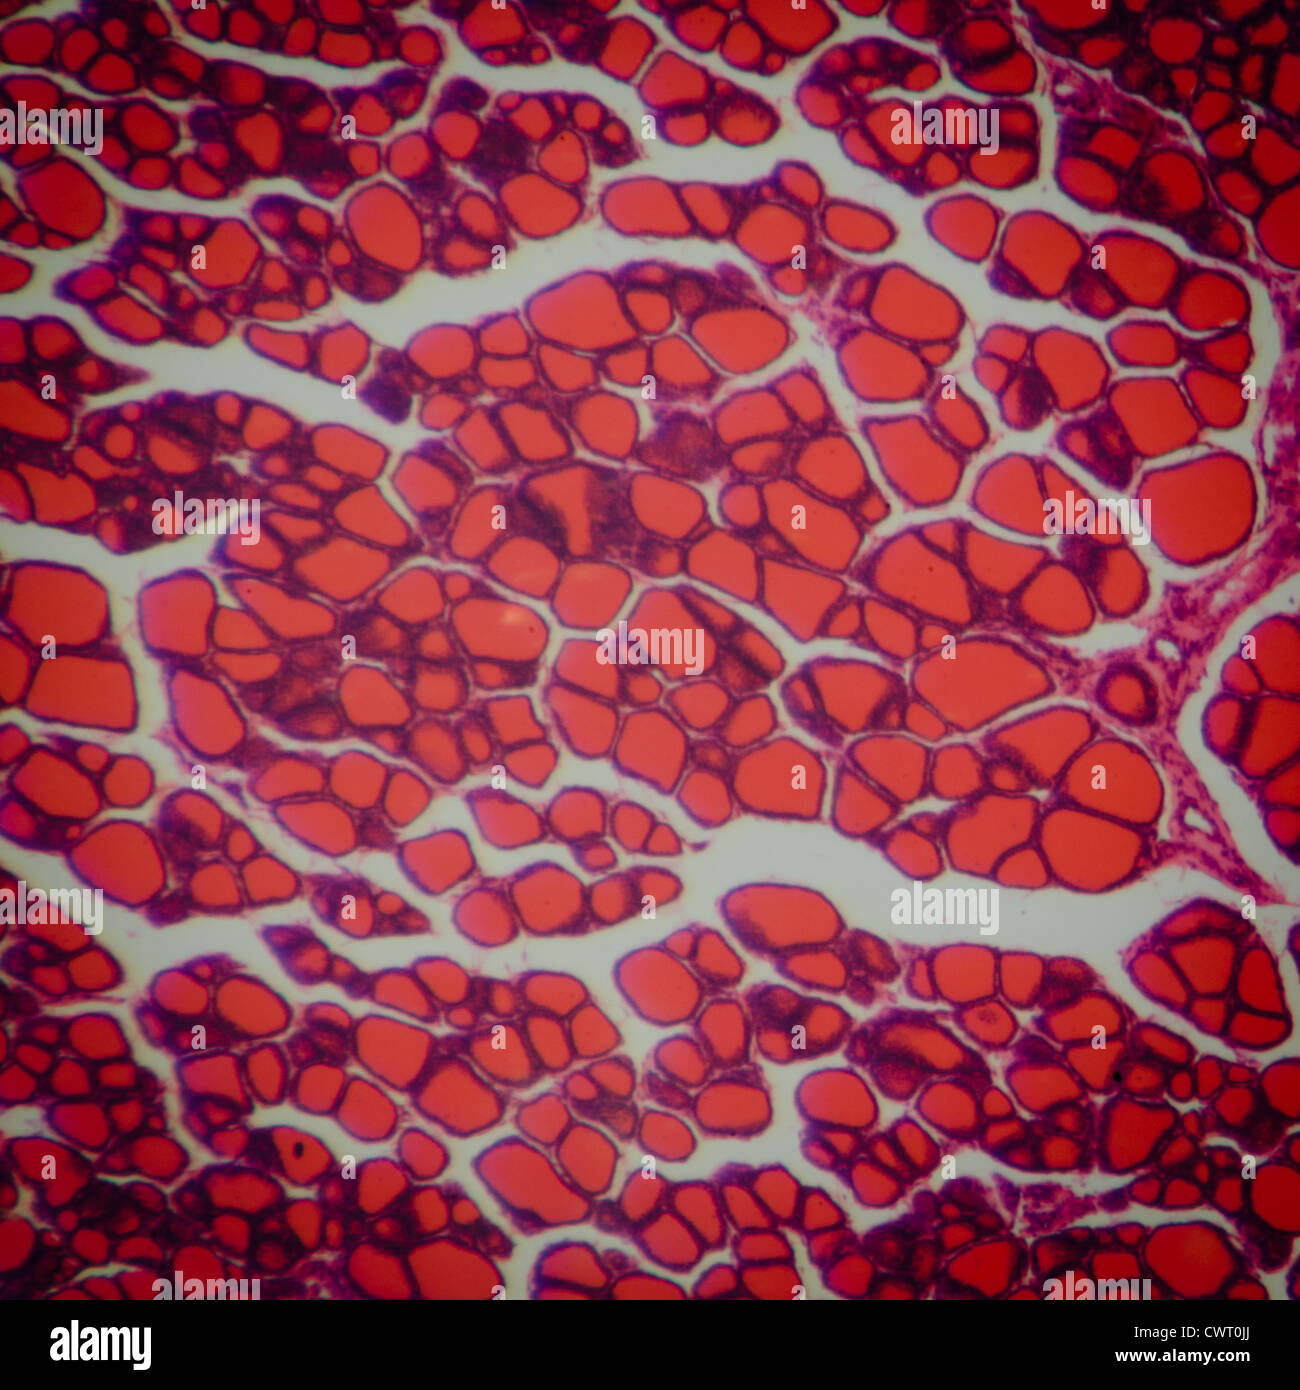 Medical science anthropotomy article microscopique physiologie de la glande thyroïde background Banque D'Images